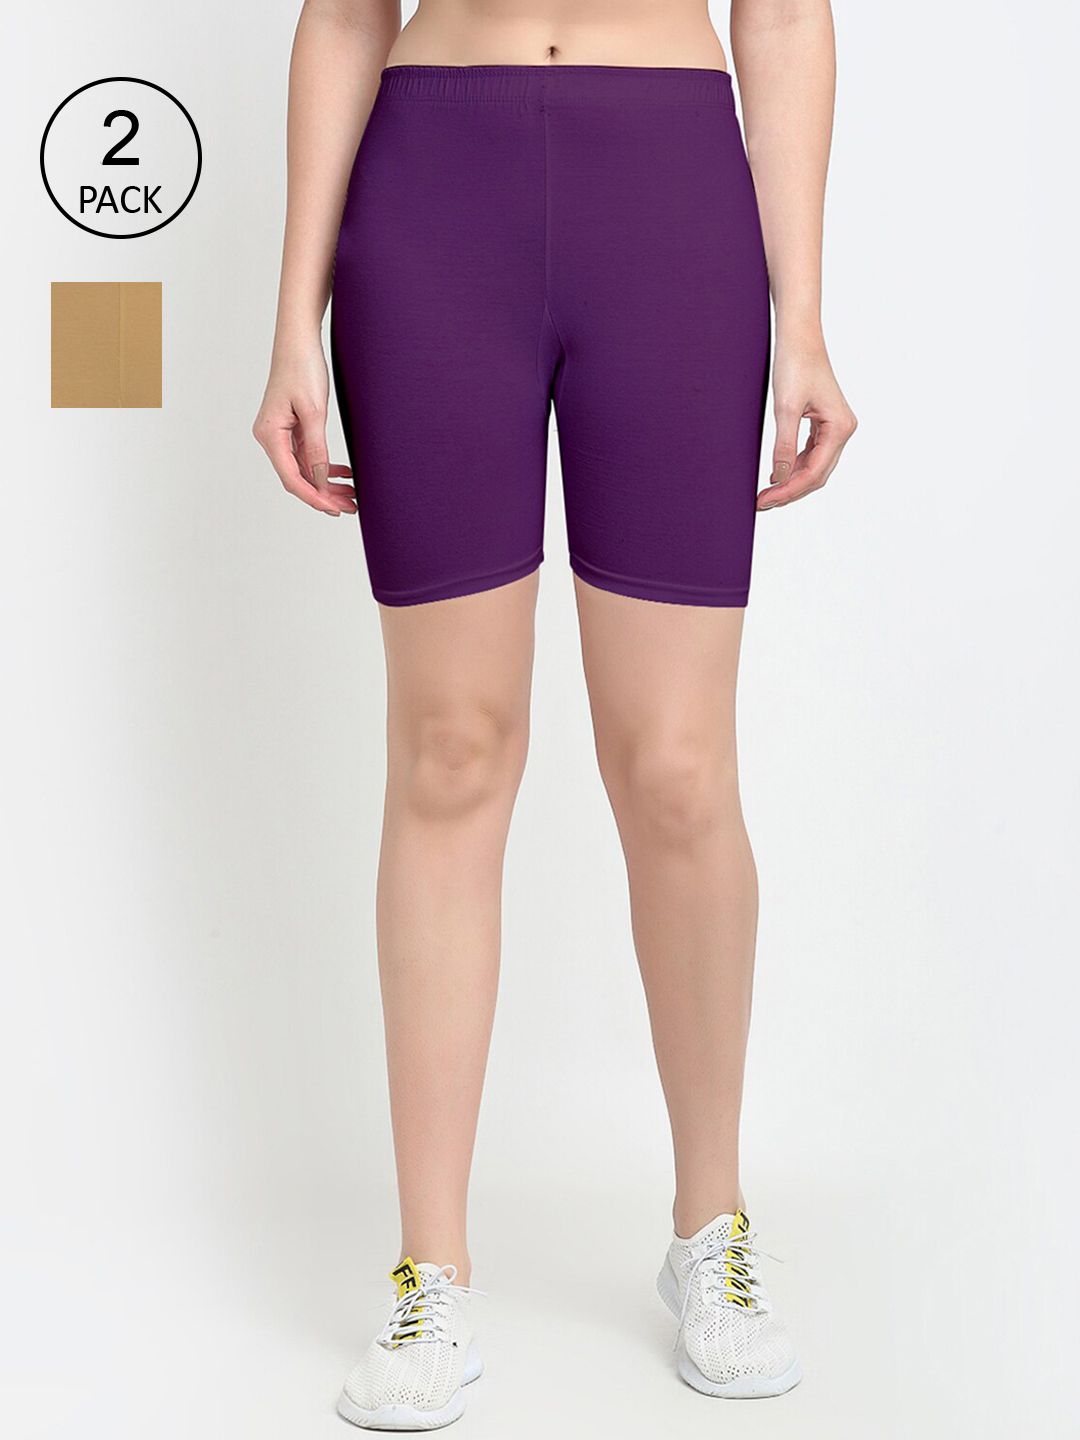 GRACIT Women Set Of 2 Purple & Beige Solid Shorts Price in India